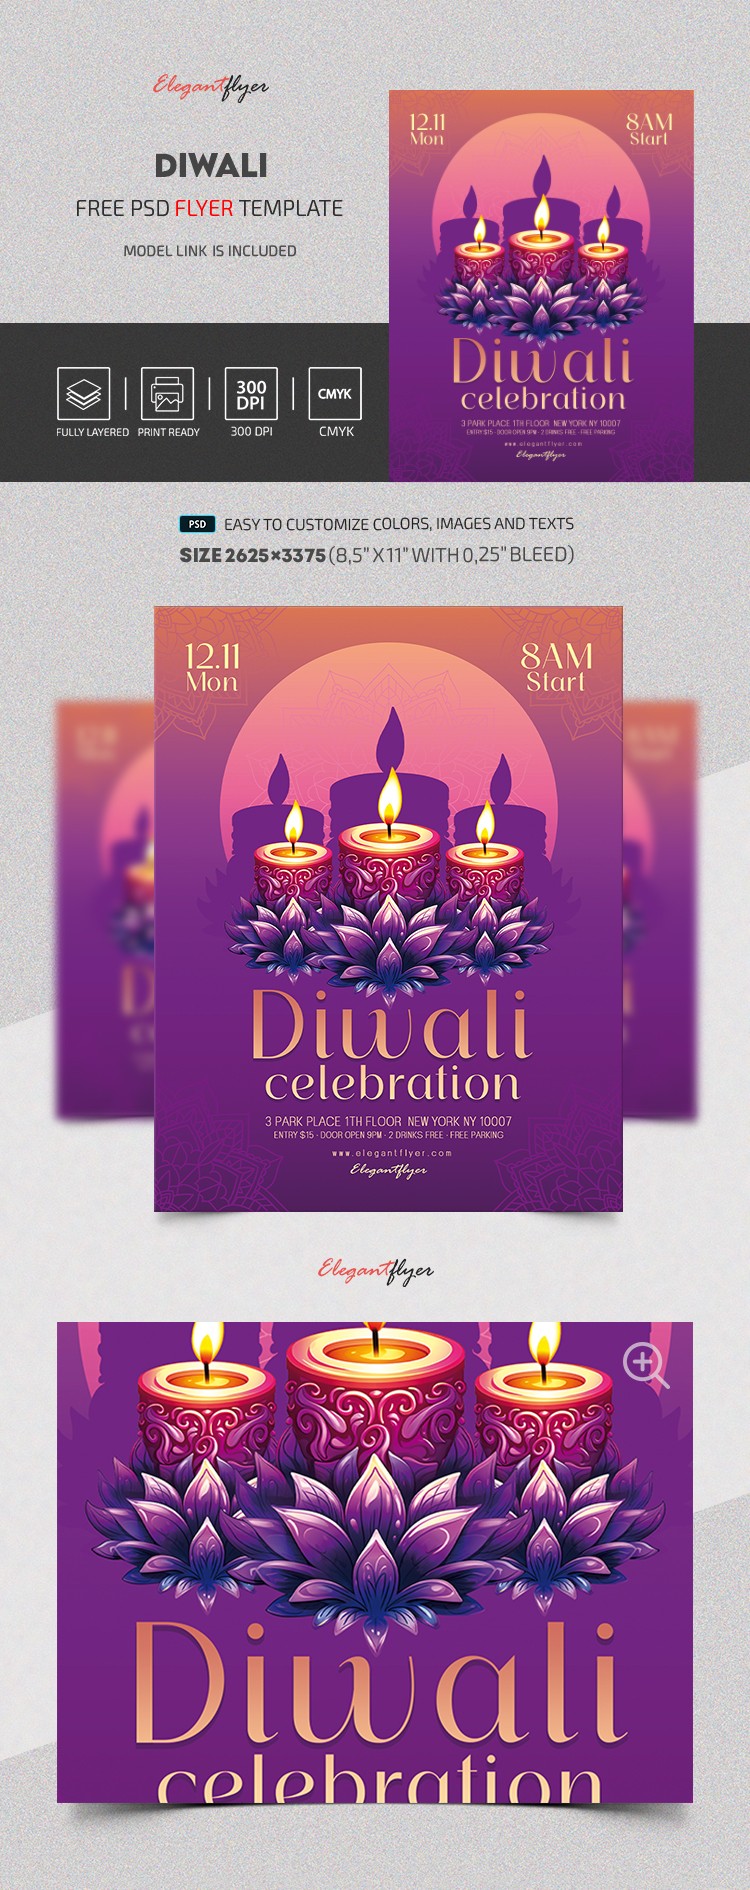 Celebración de Diwali by ElegantFlyer